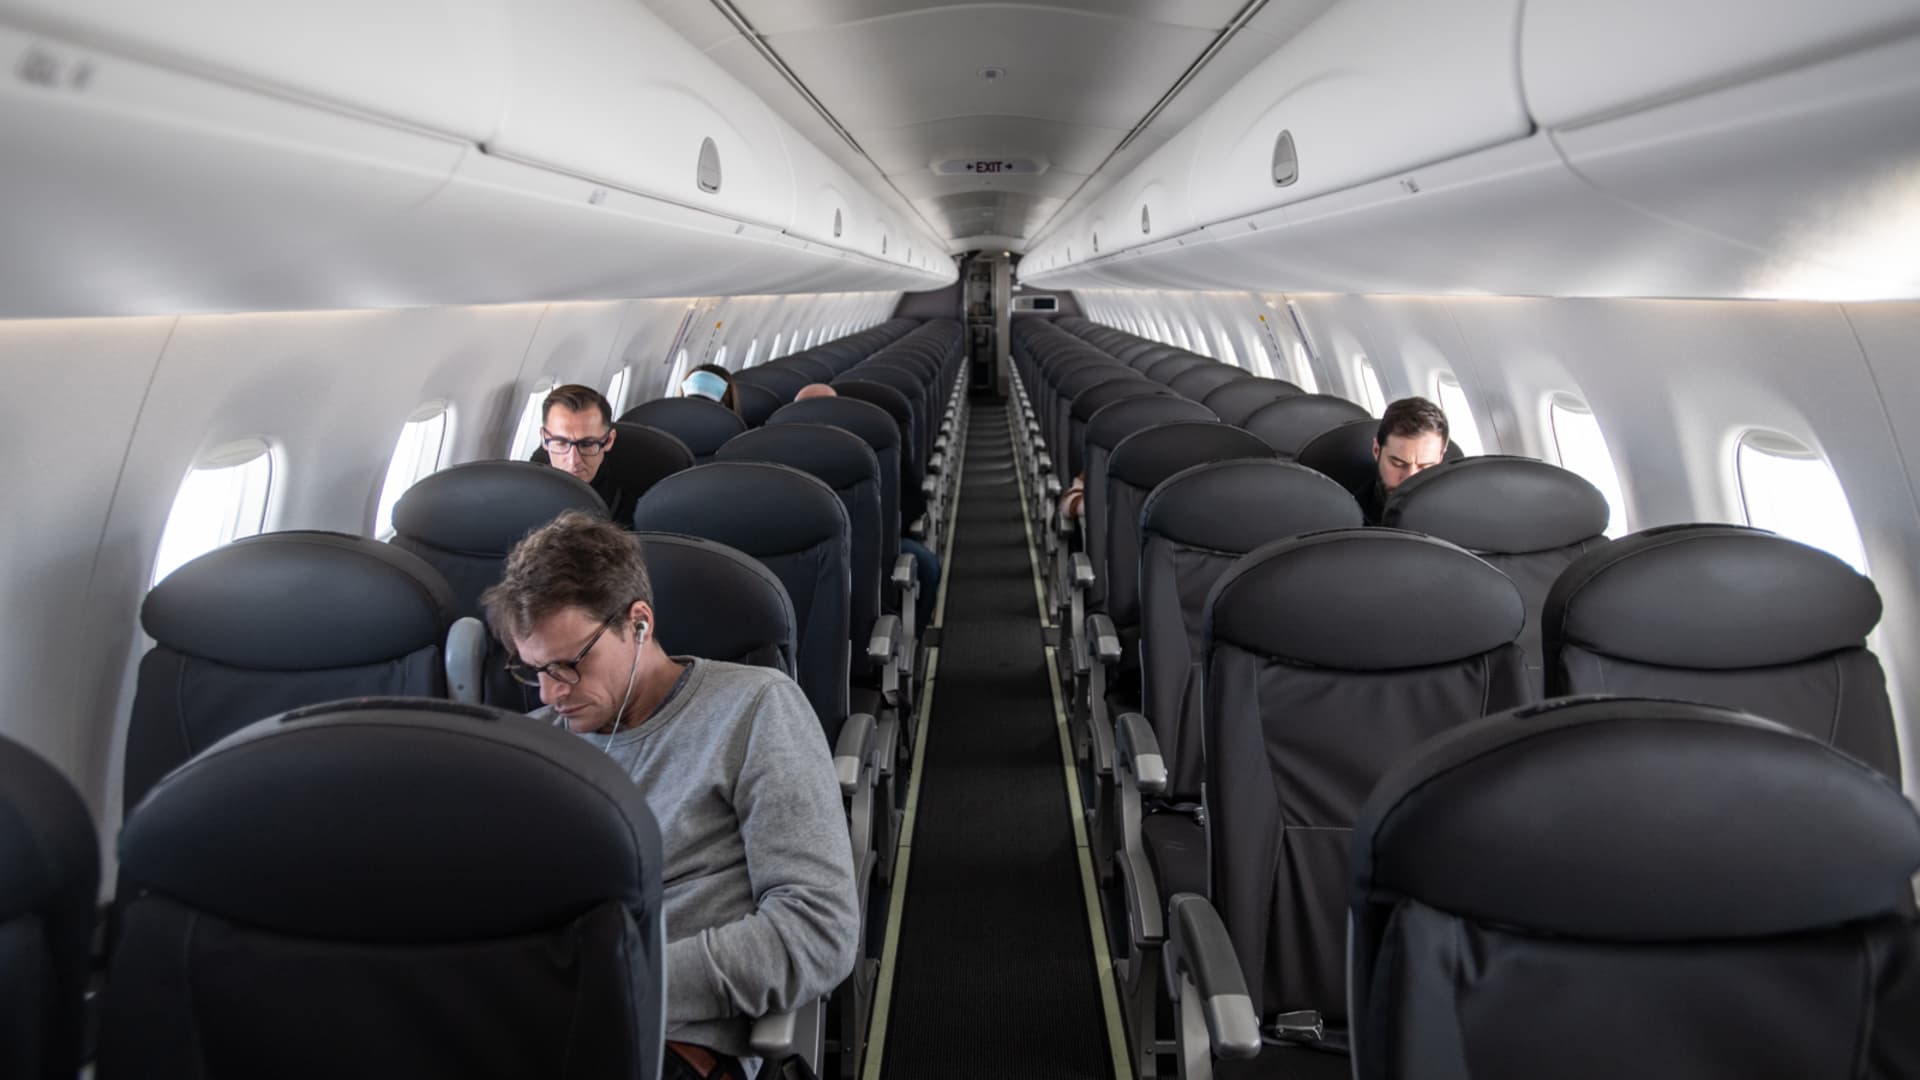 Coronavirus: Some airlines are running near-empty ghost flights